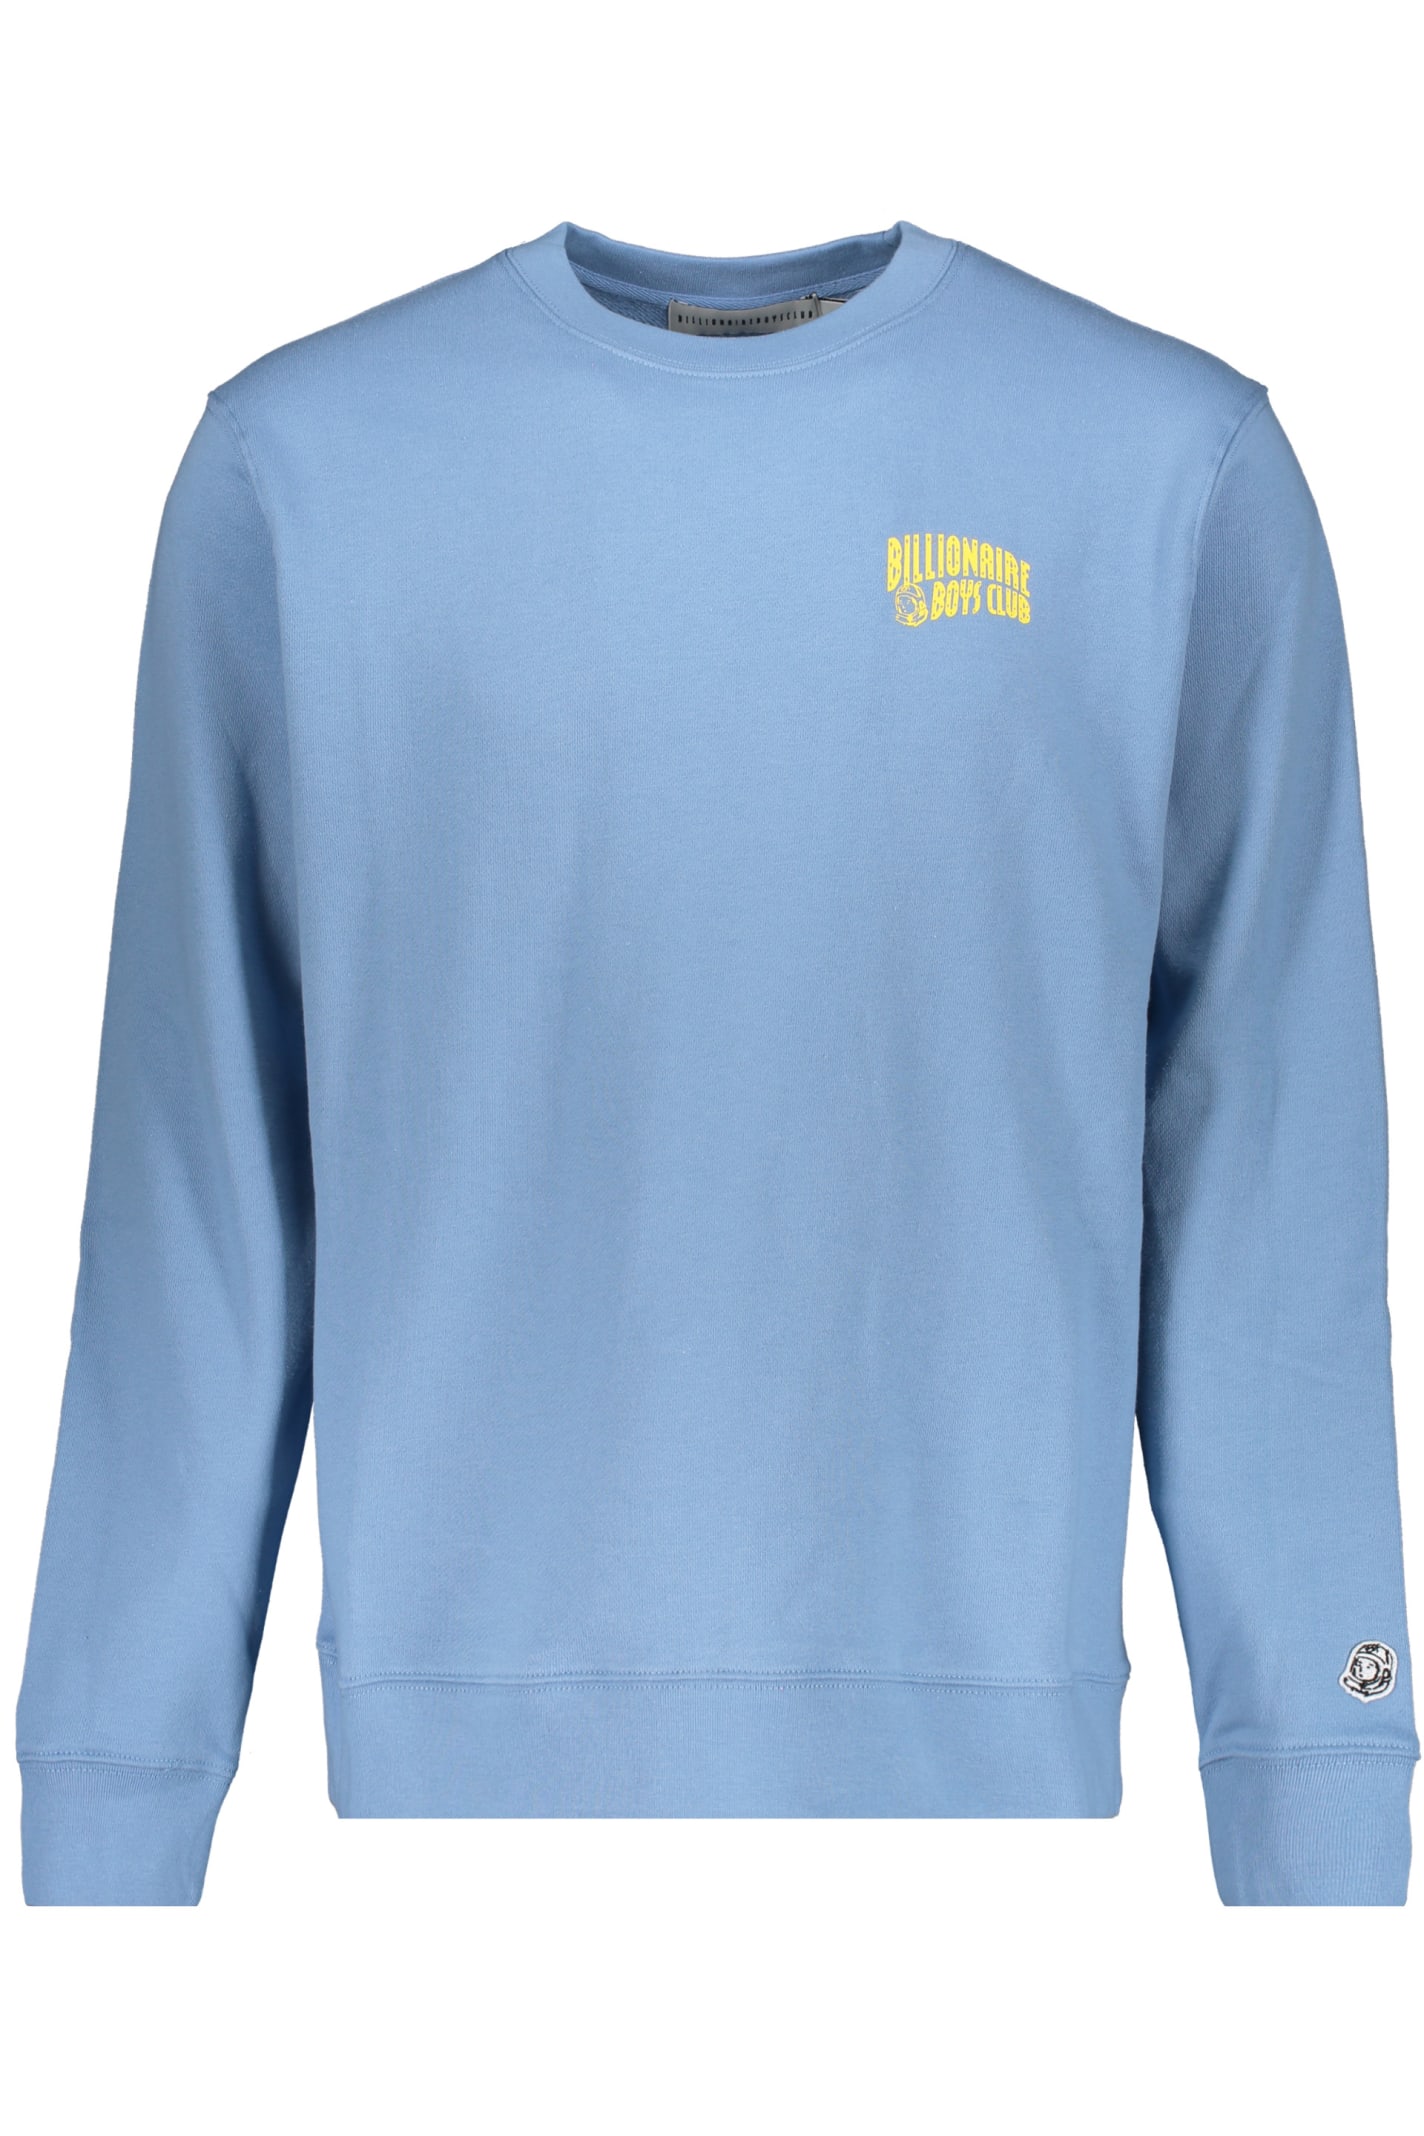 Billionaire Boys Club Logo Detail Cotton Sweatshirt In Blue